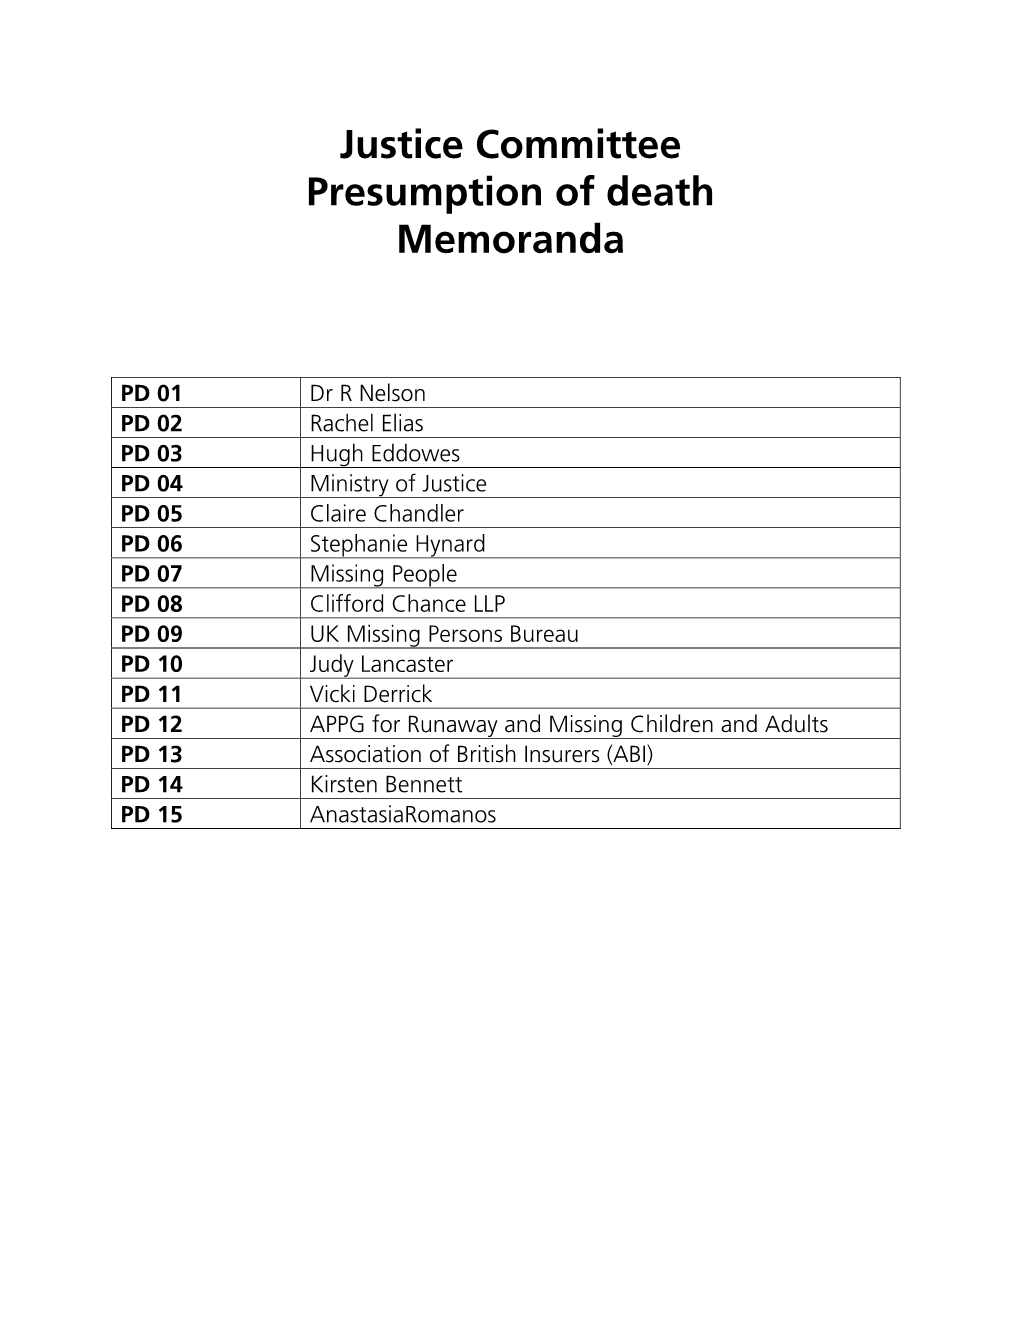 Justice Committee Presumption of Death Memoranda